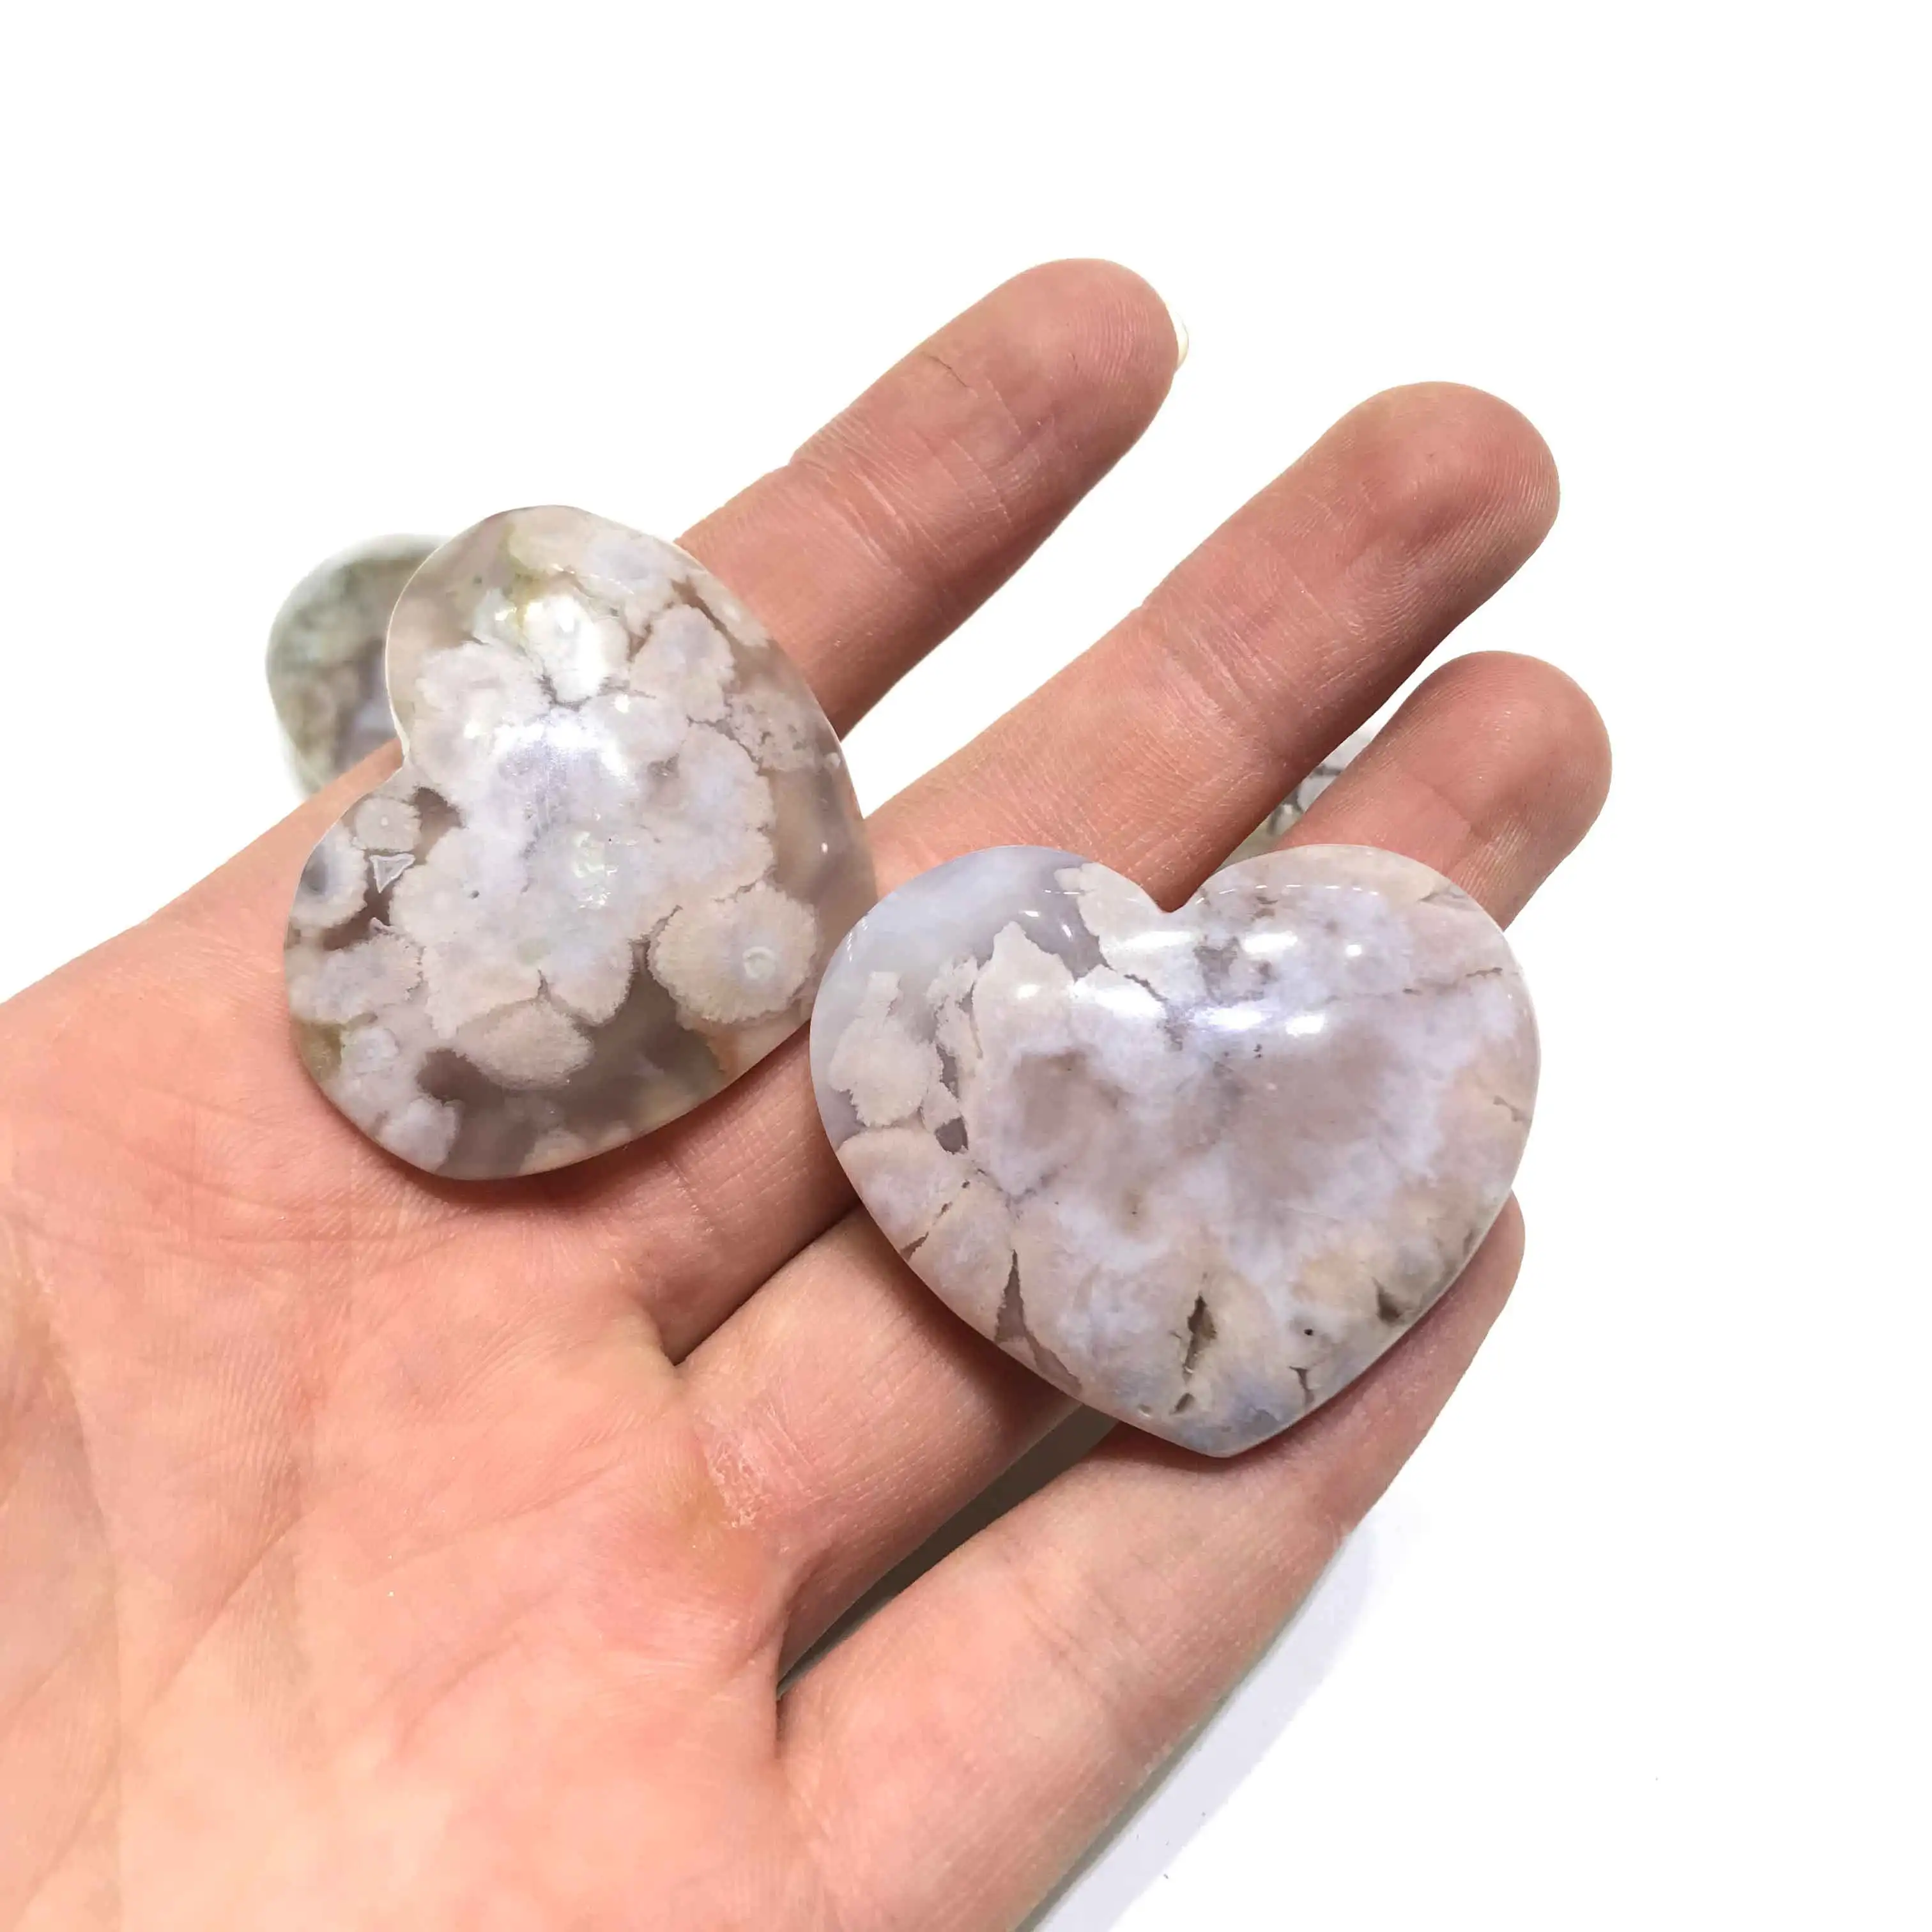 Details about   10pc Mini Flower Agate Moon Quartz Crystal Hand Carved Reiki Healing Wholesale